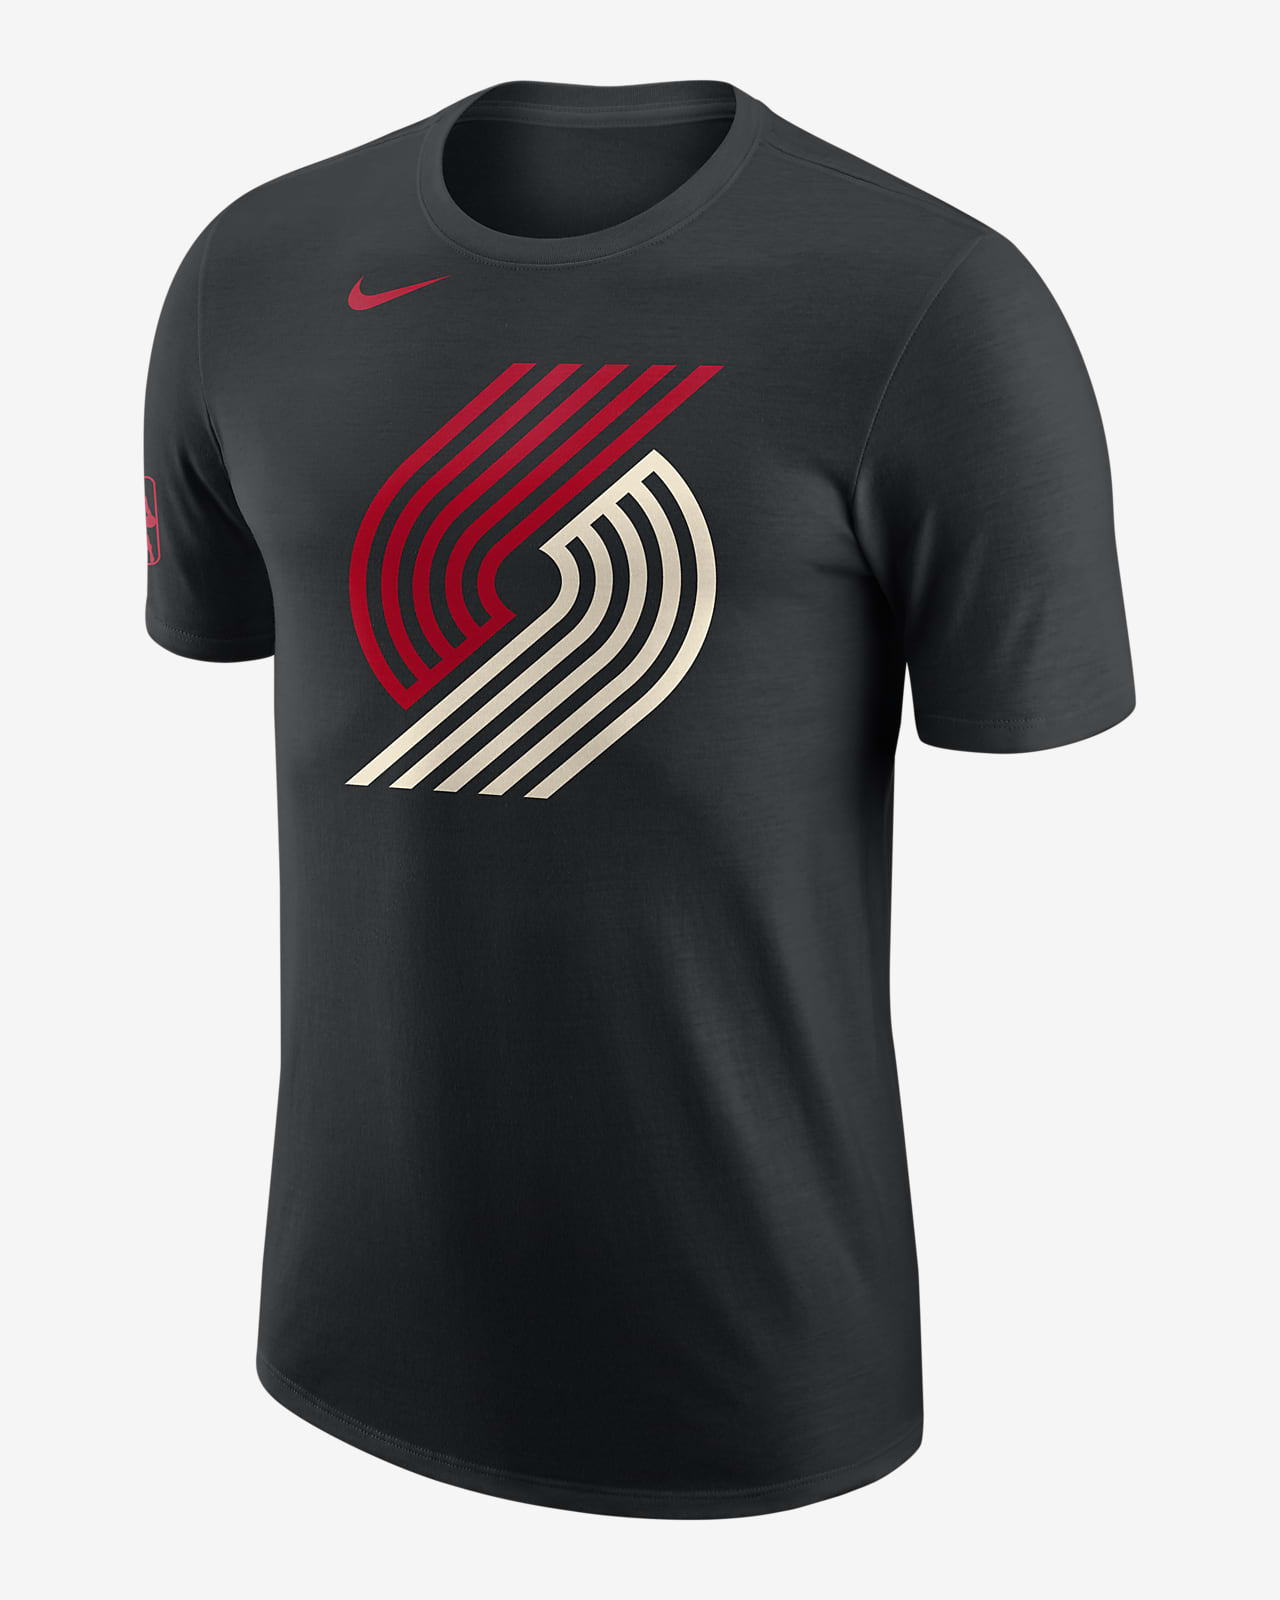 Playera Nike de la NBA para hombre Portland Trail Blazers City Edition